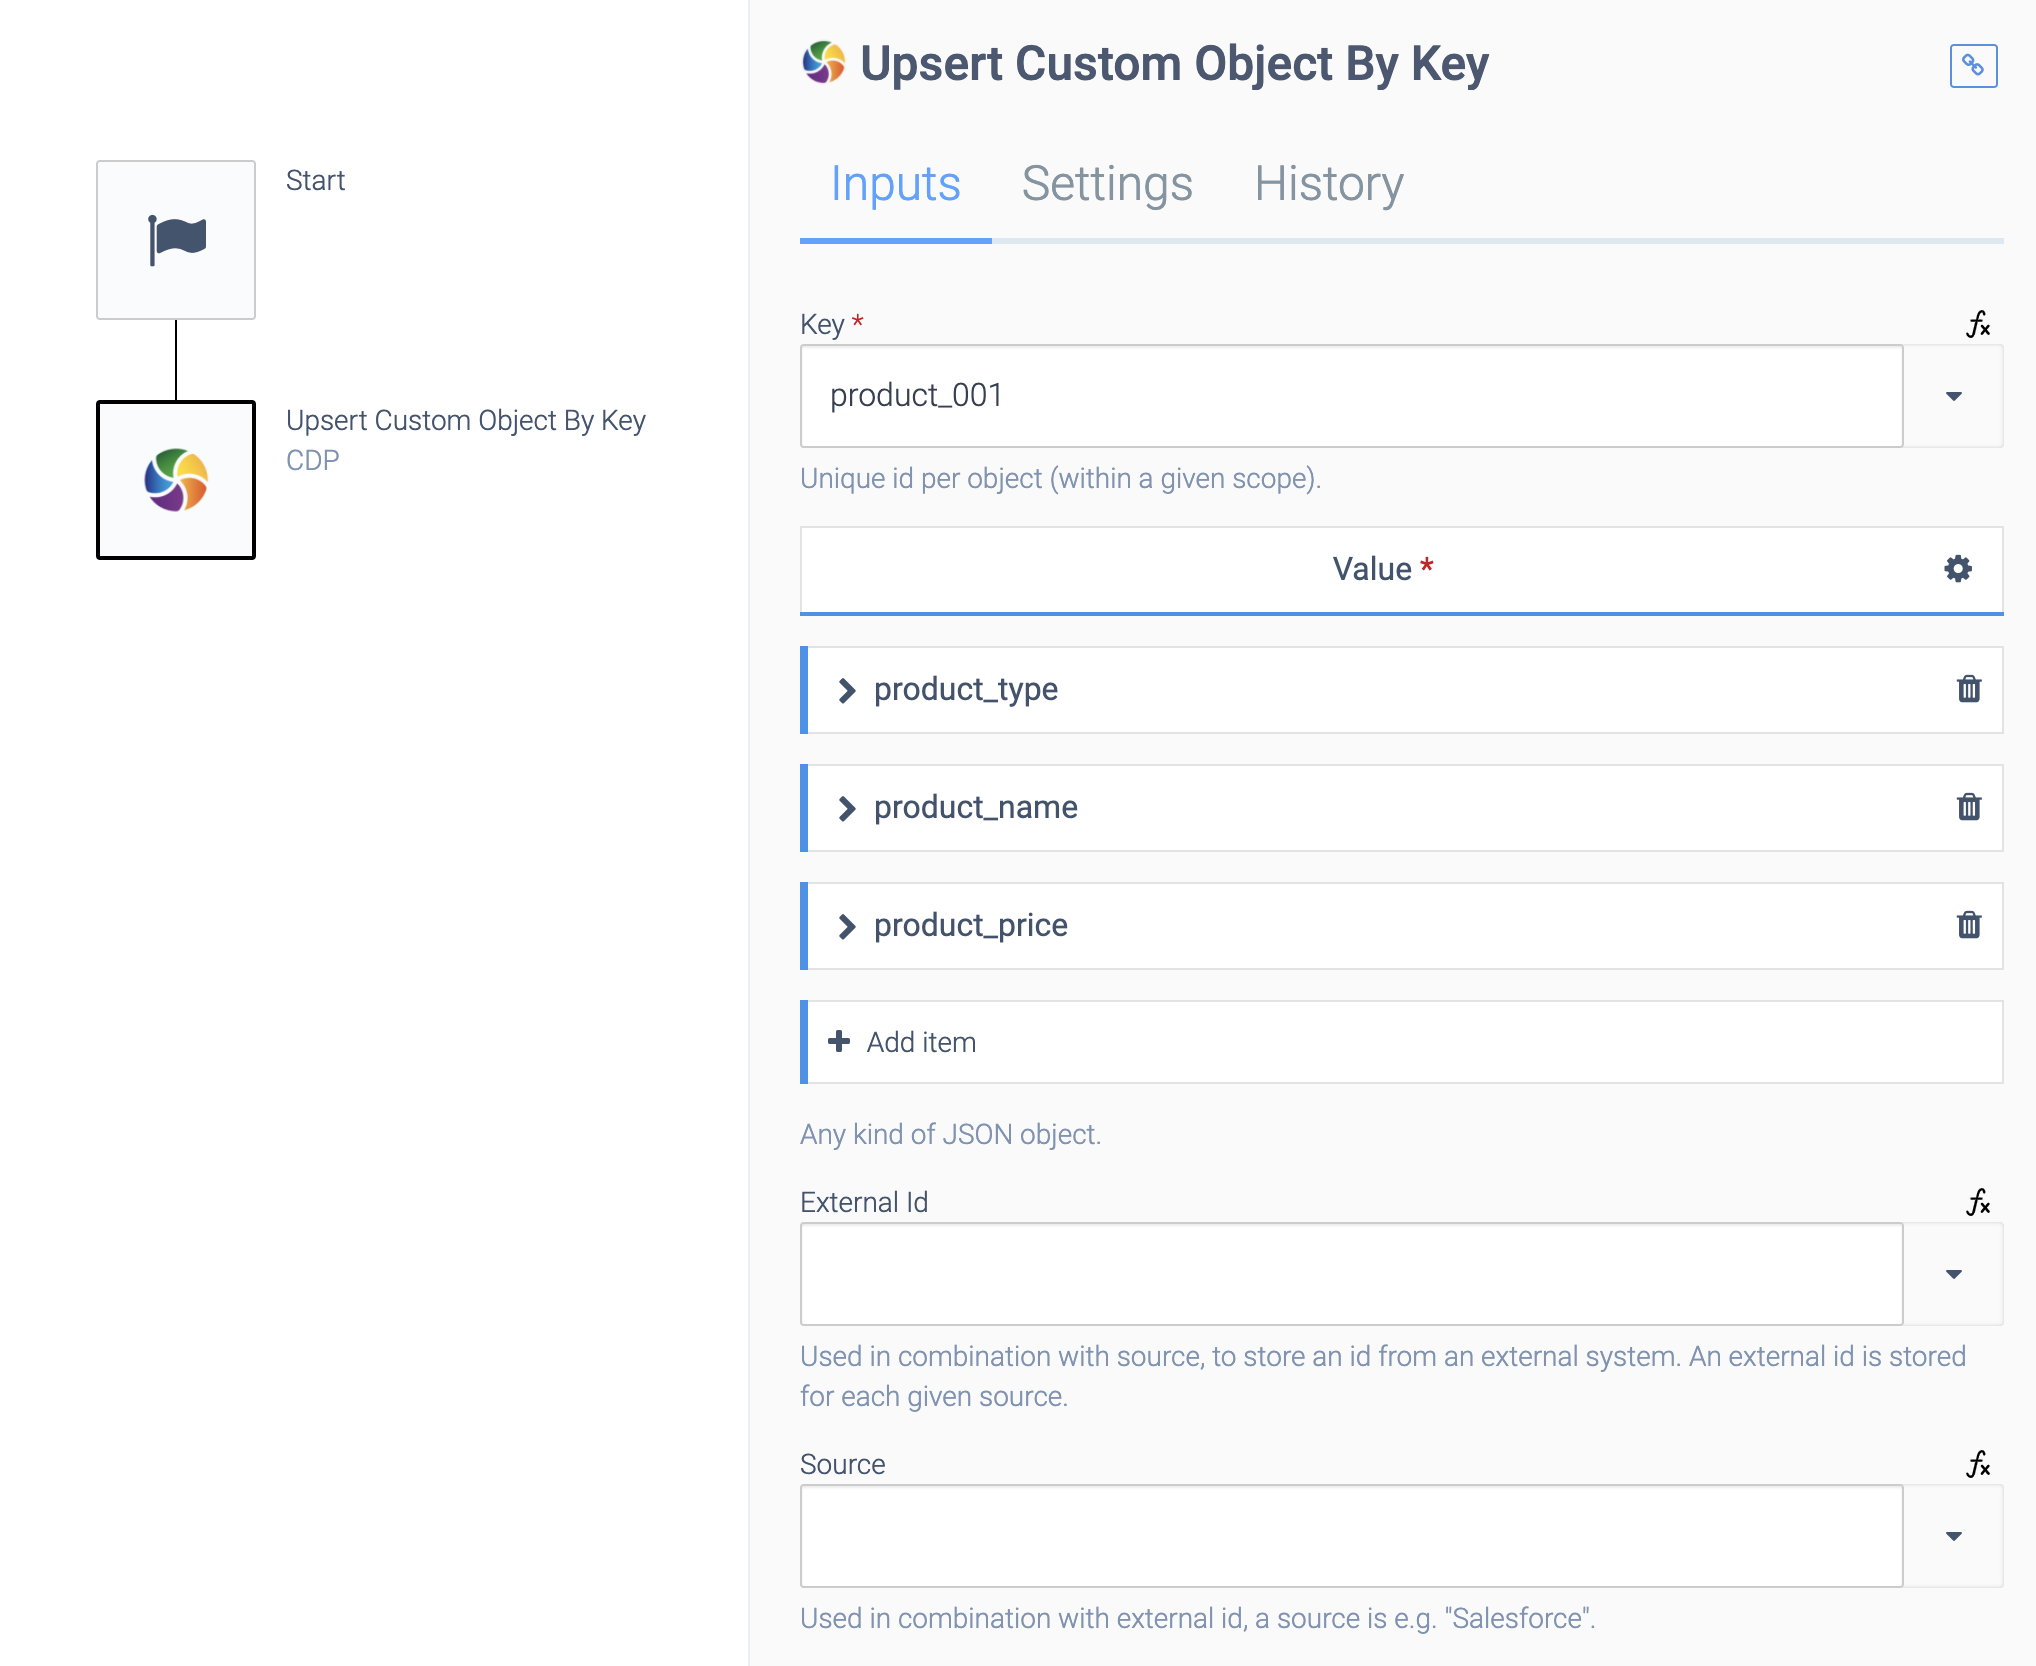 An Upsert Custom Object By Key block. Key is set to product_001.